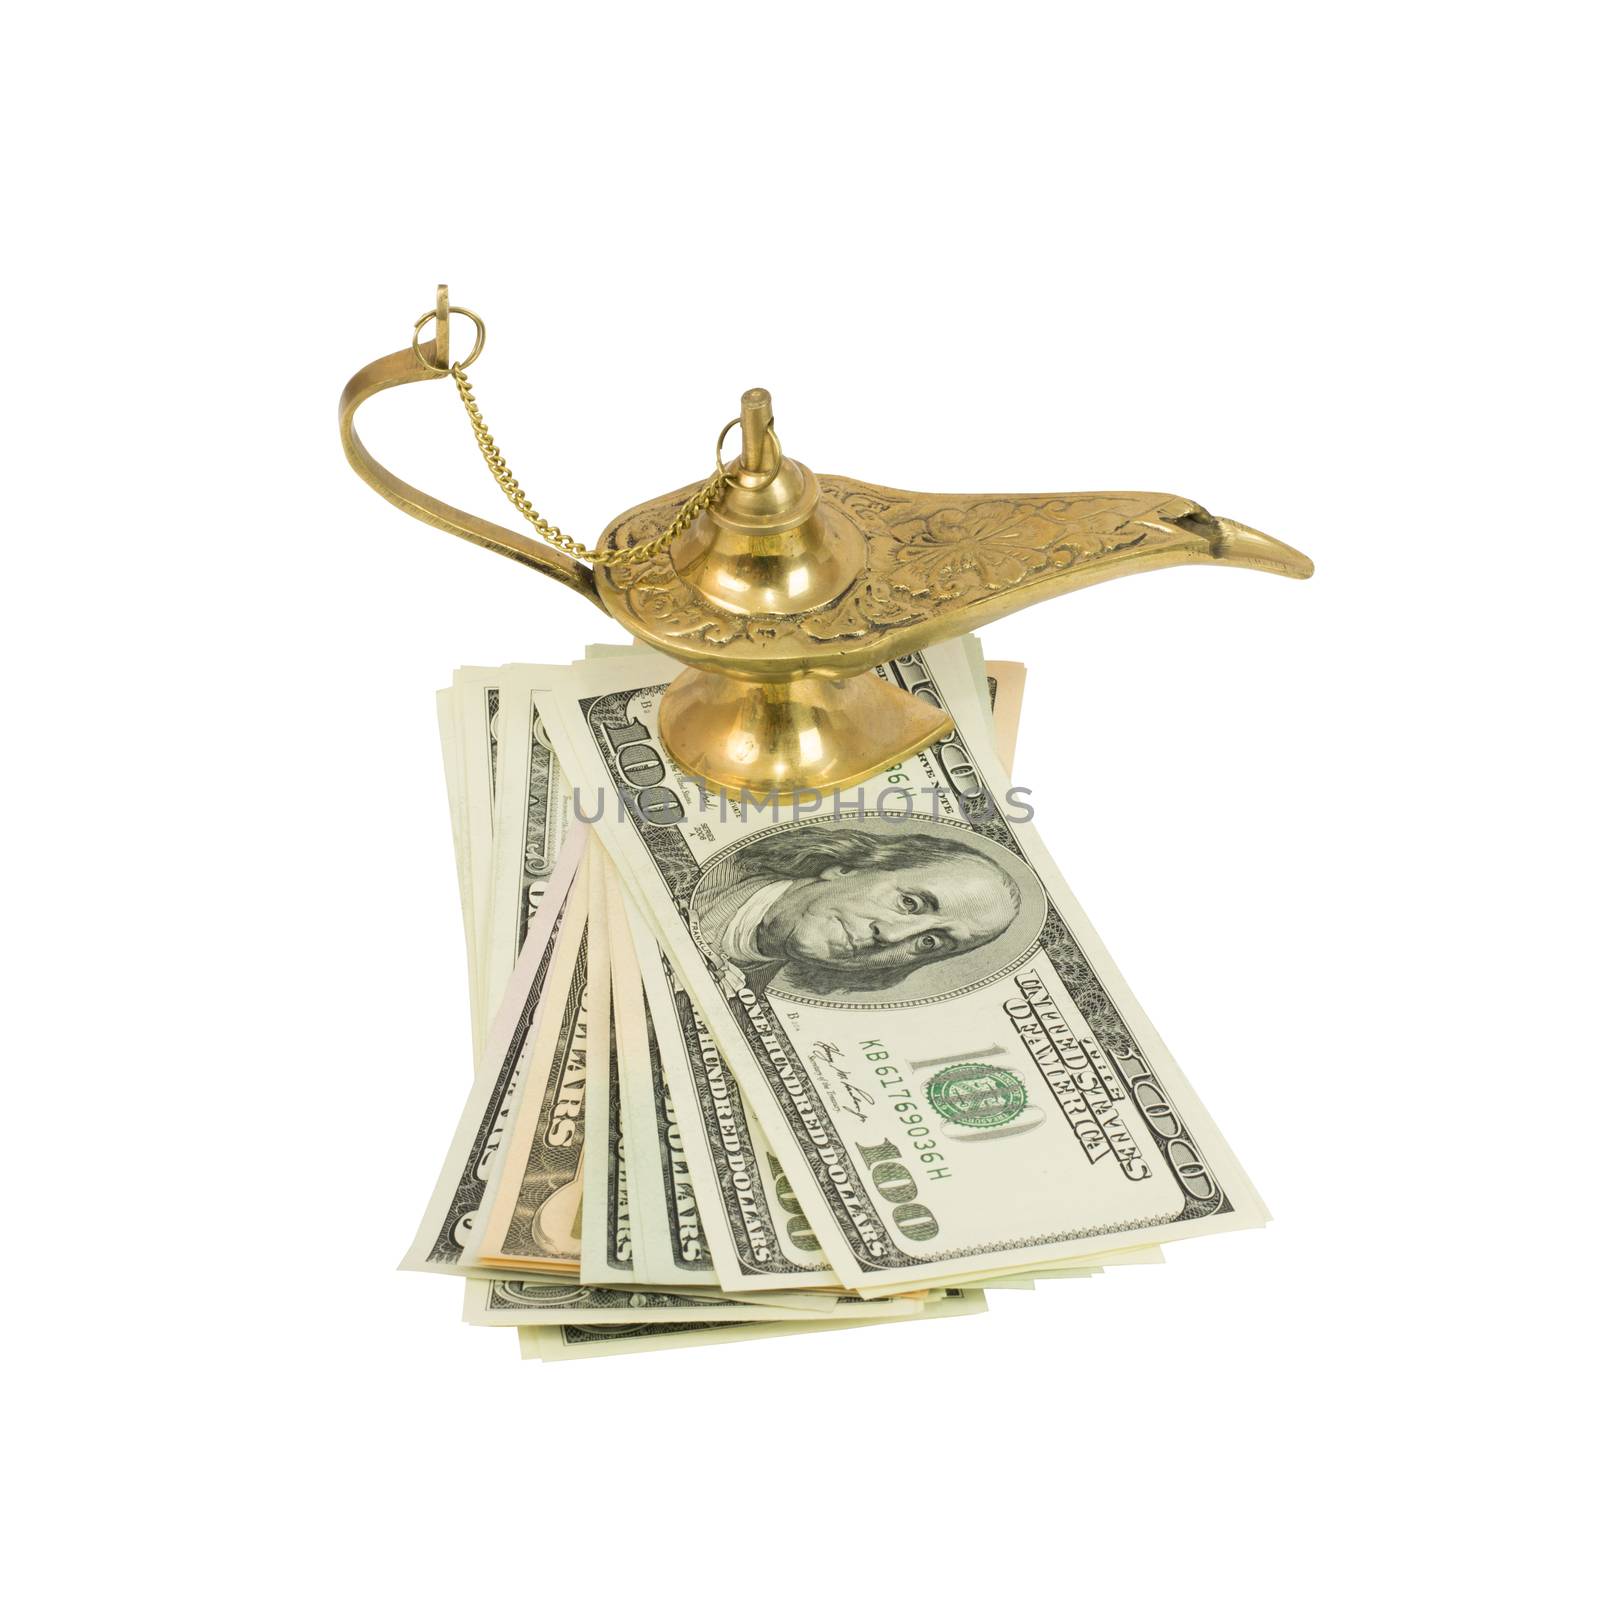 Bundle of dollars and magic lamp of Aladdin by cherezoff